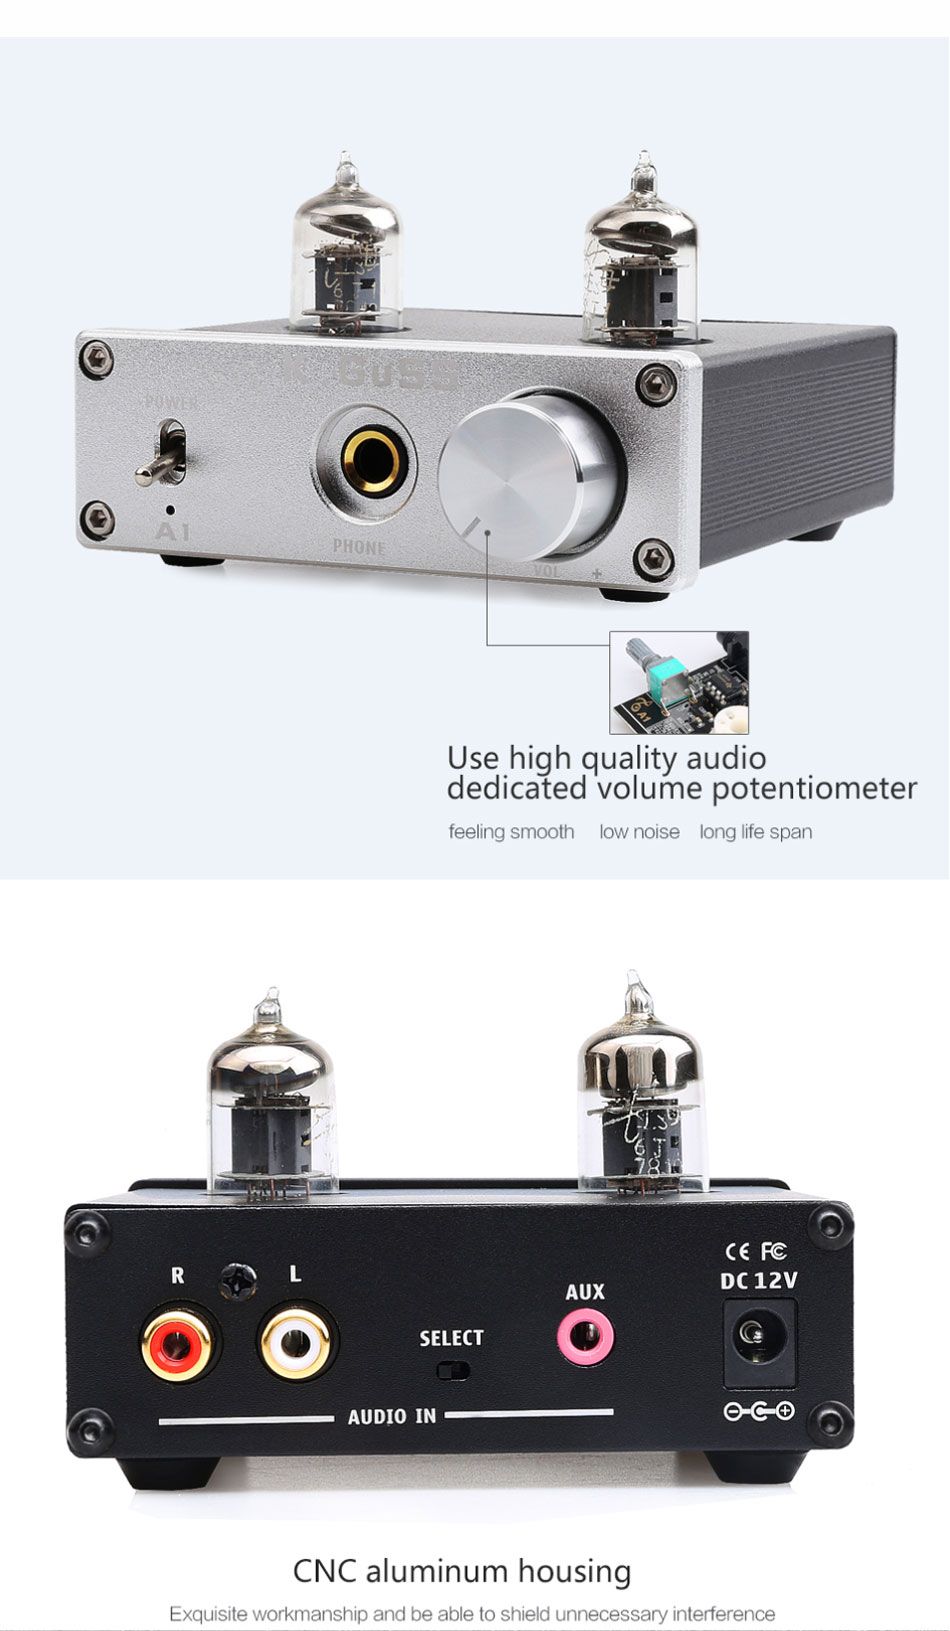 KGUSS-A1-Ne5532-6K4-6J1-120mW-HIFI-Tube-Vacuum-Headphone-Amplifier-1607161